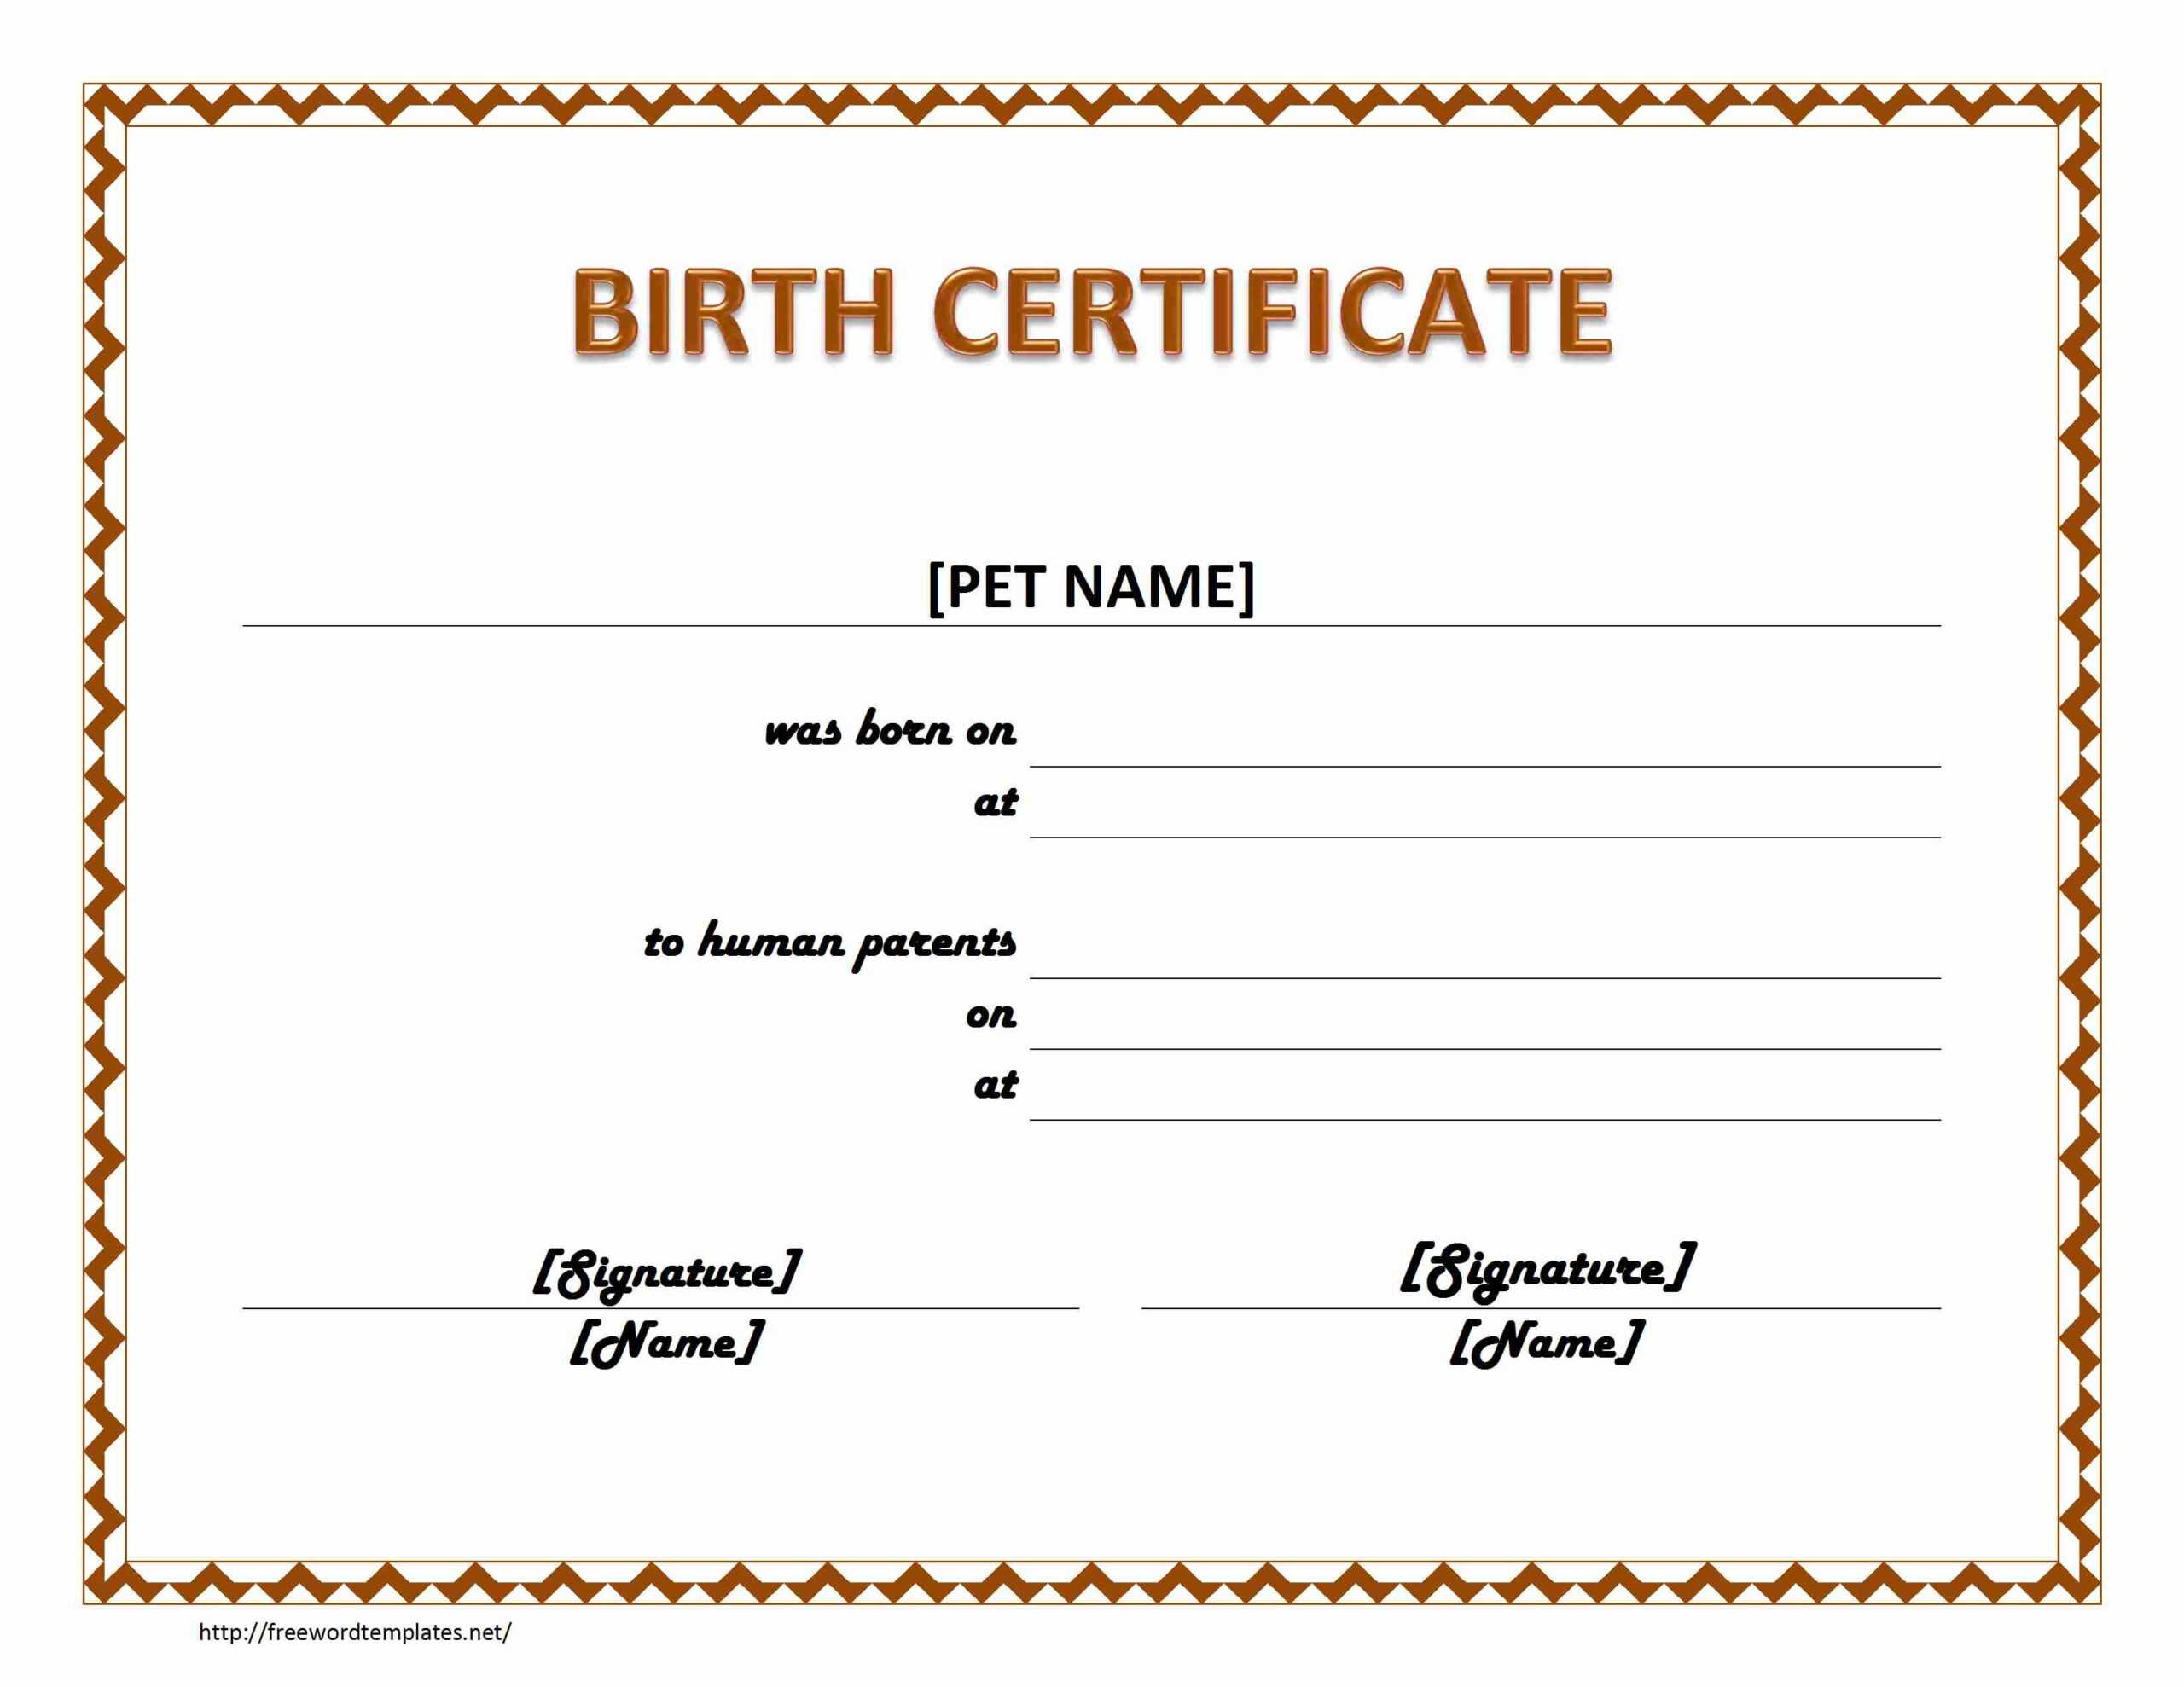 Pet Birth Certificate Maker | Pet Birth Certificate For Word With Birth Certificate Template For Microsoft Word